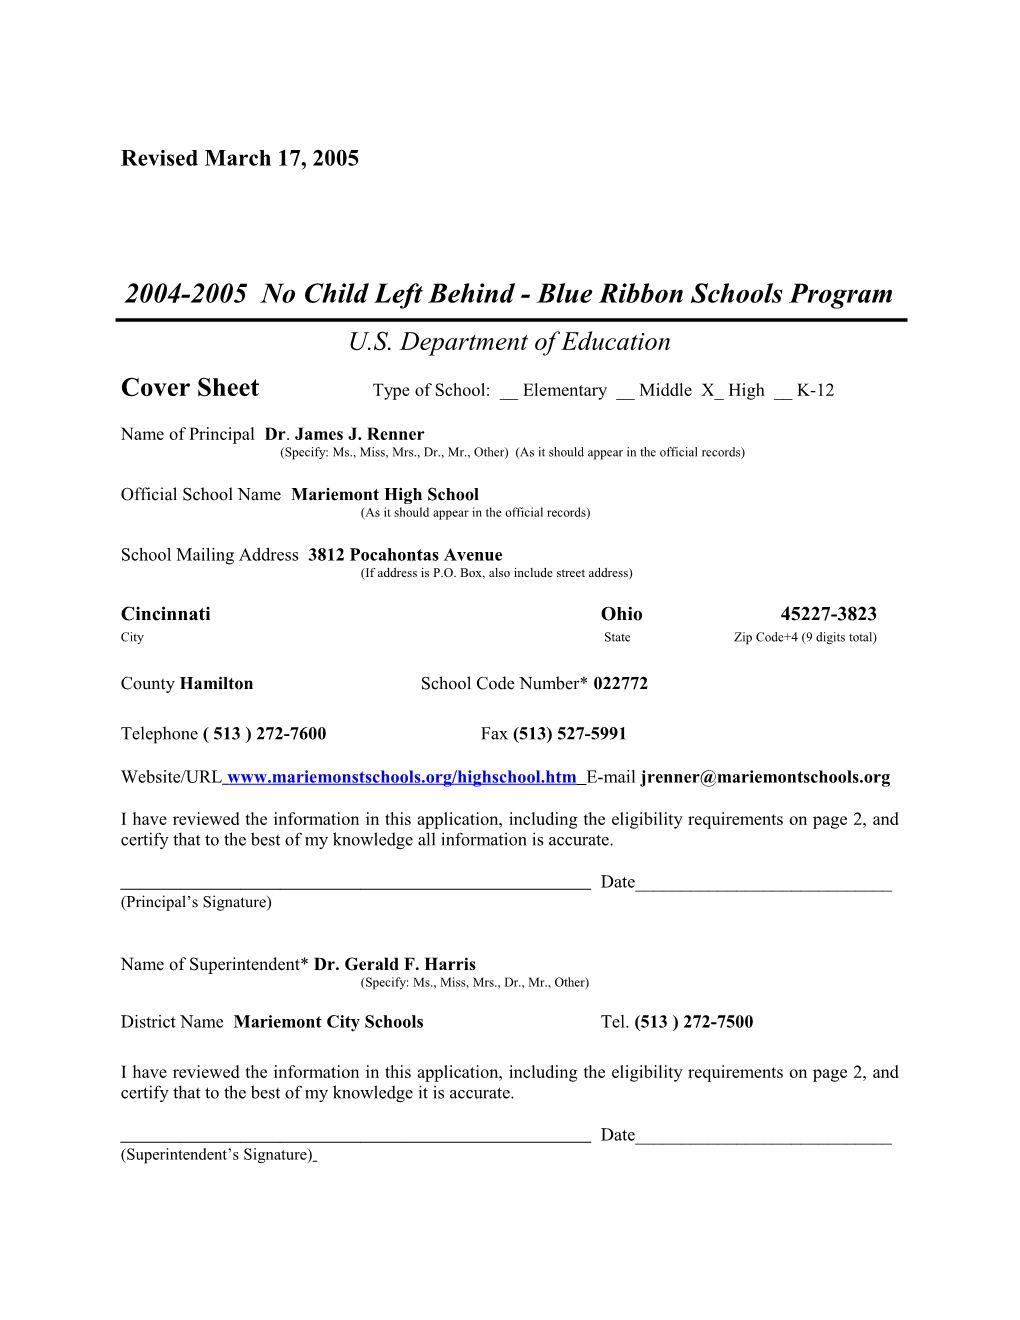 Mariemont High School Application: 2004-2005, No Child Left Behind - Blue Ribbon Schools